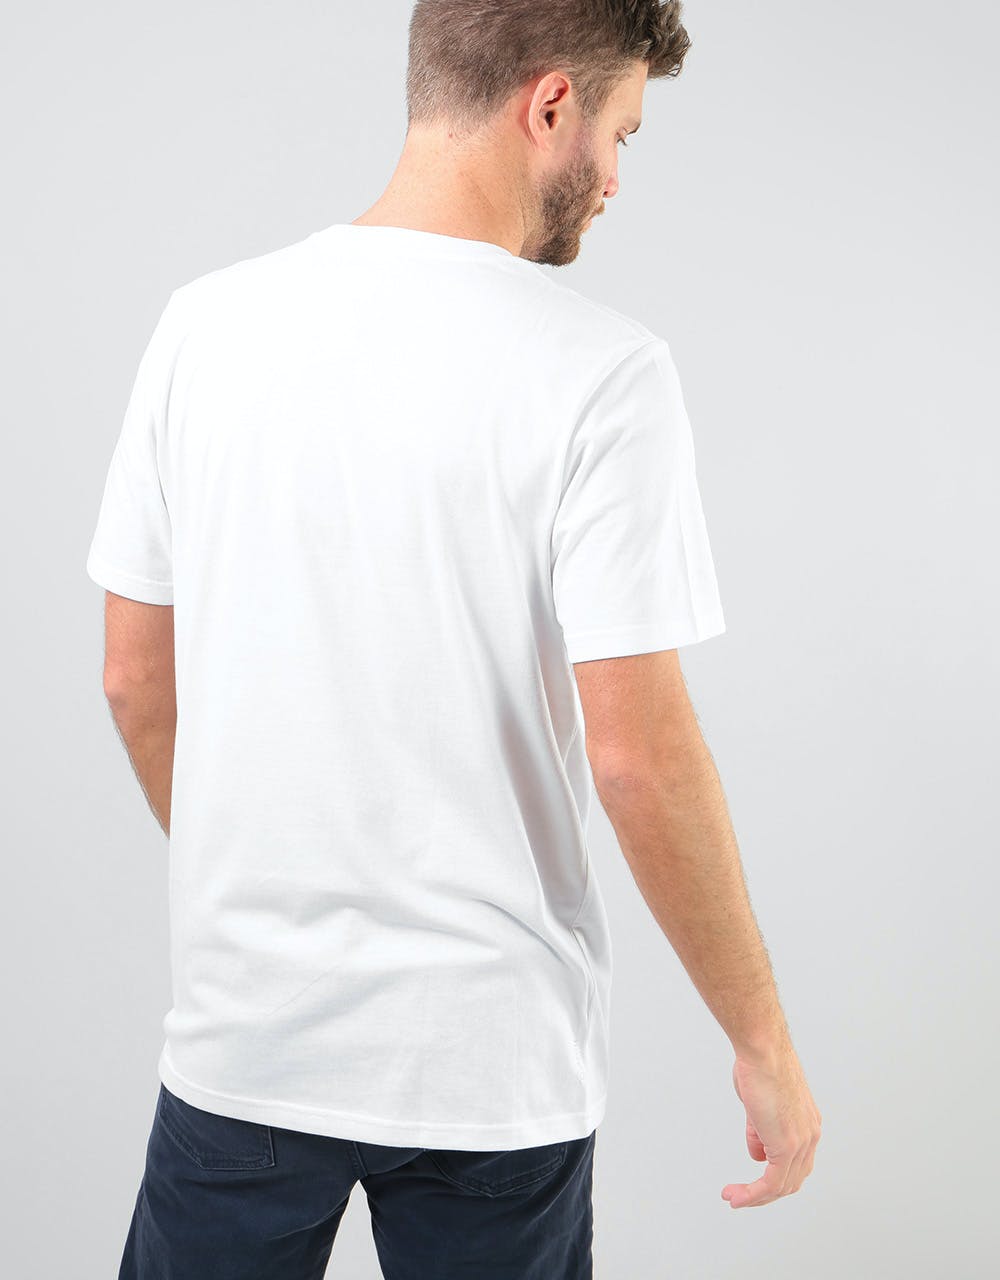 Adidas Clima 3.0 T-Shirt - White/Black